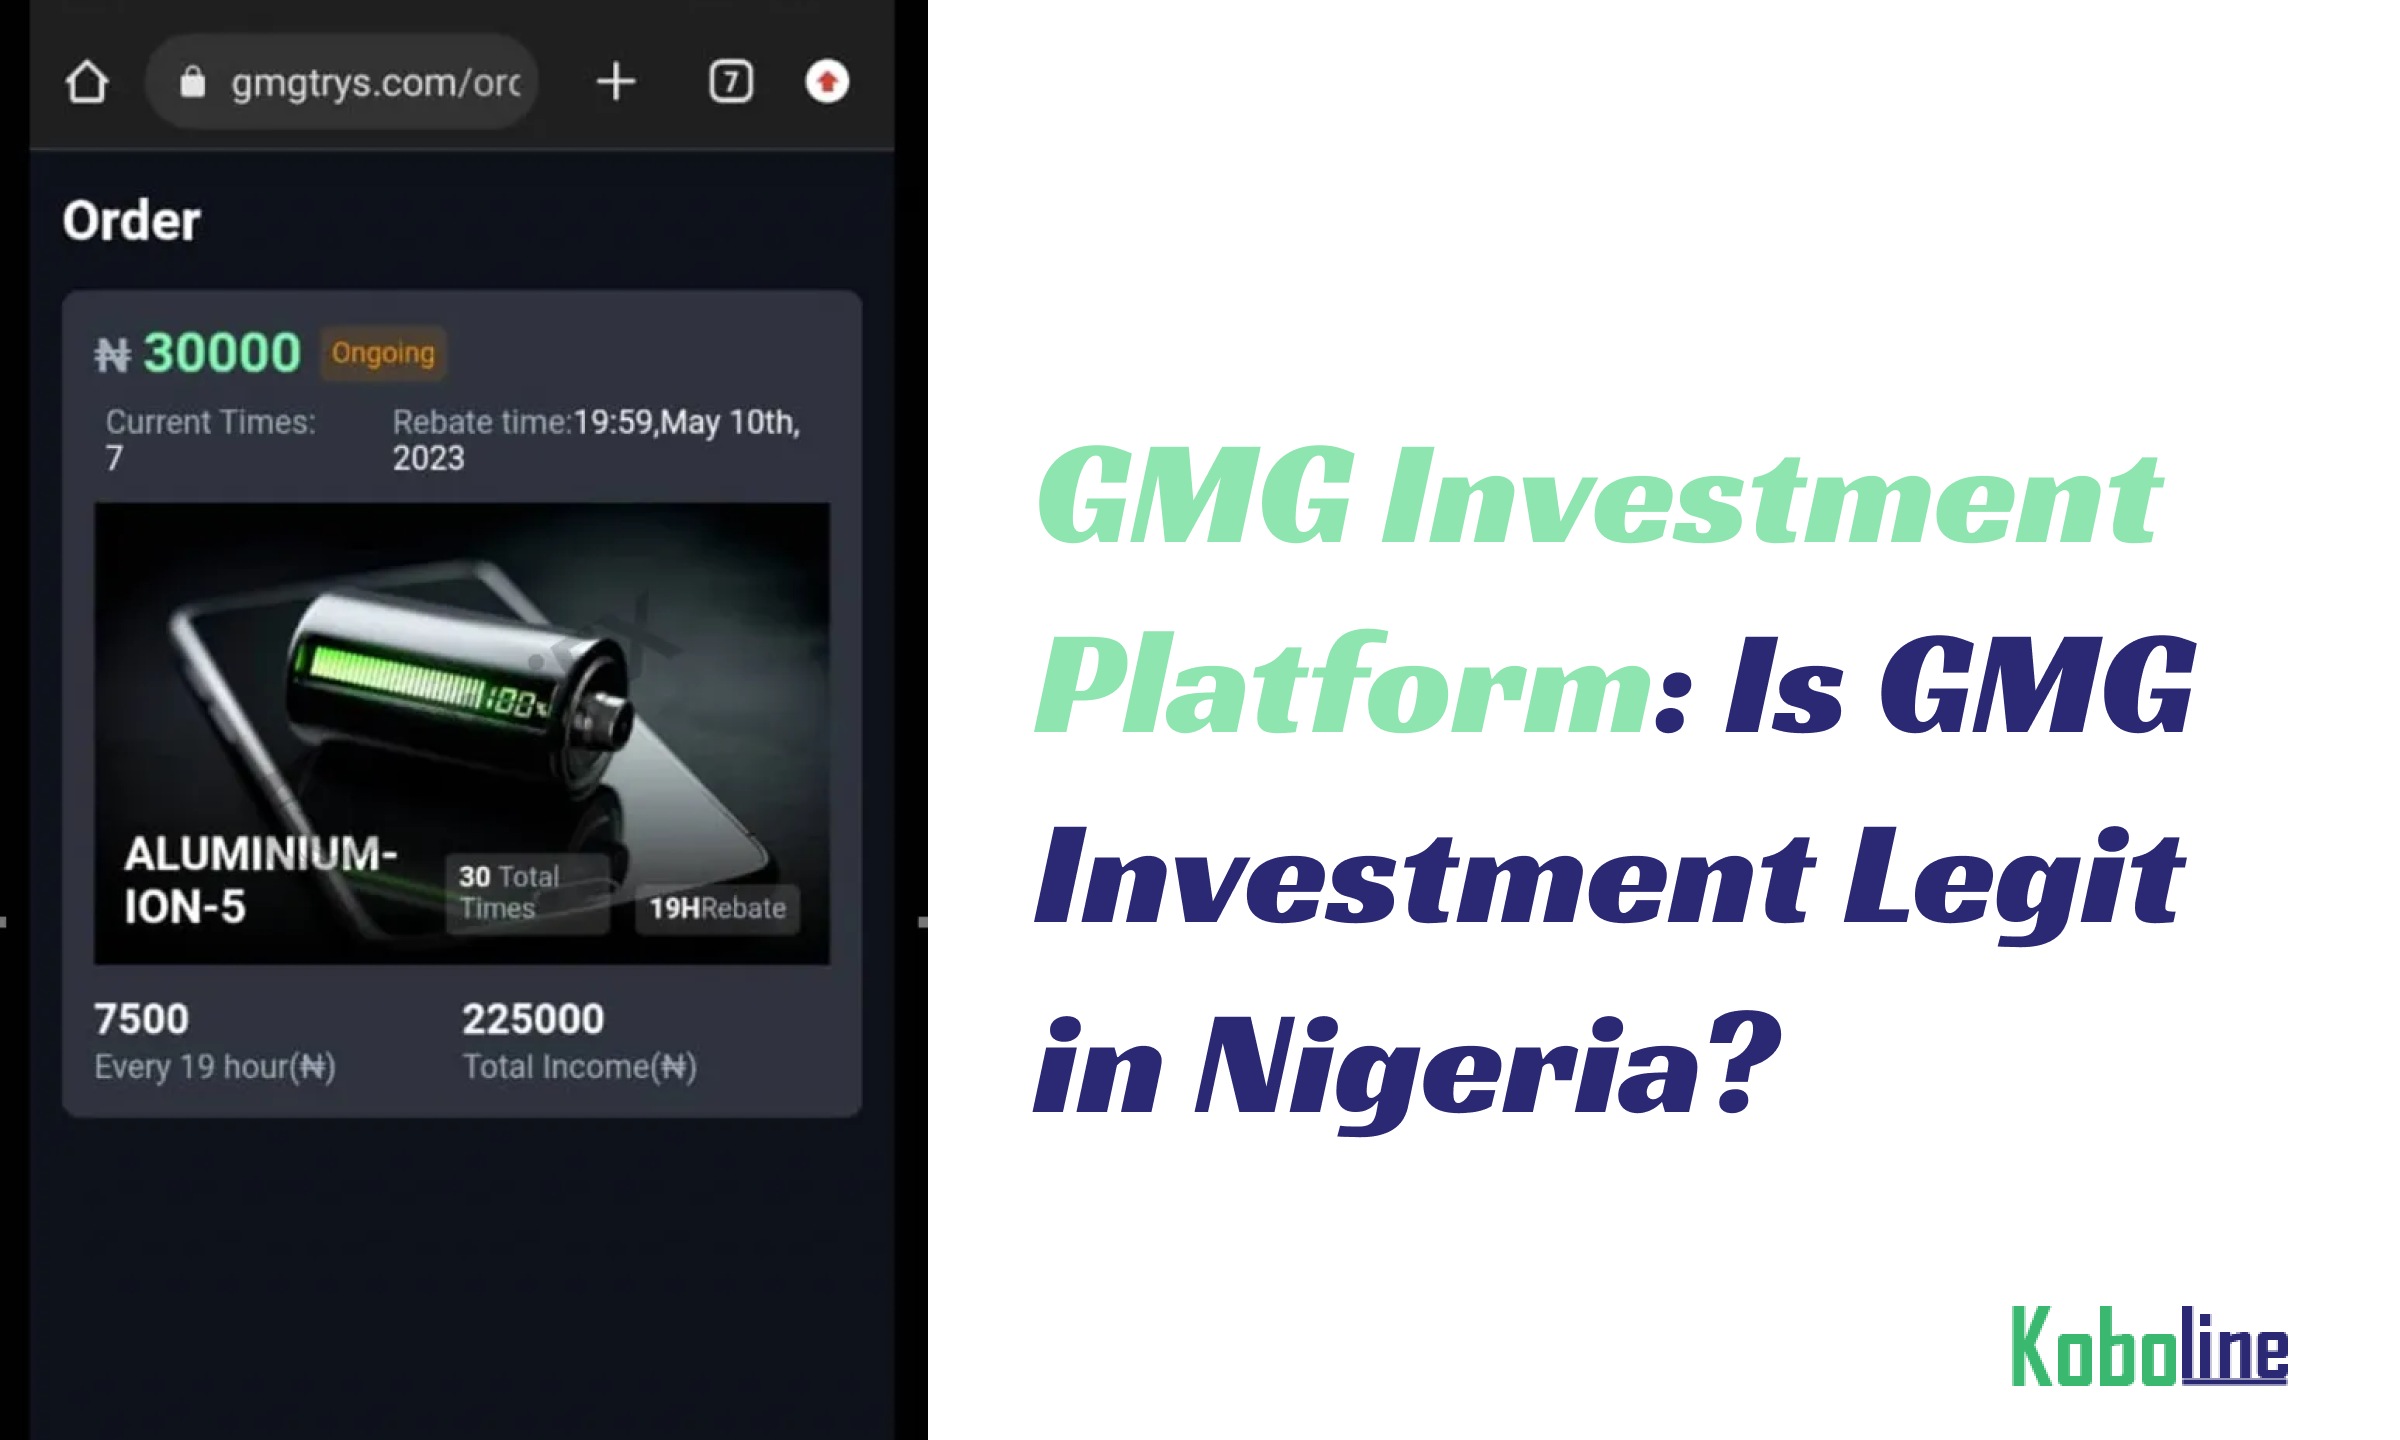 GMG Investment Platform: Is GMG Investment Legit?